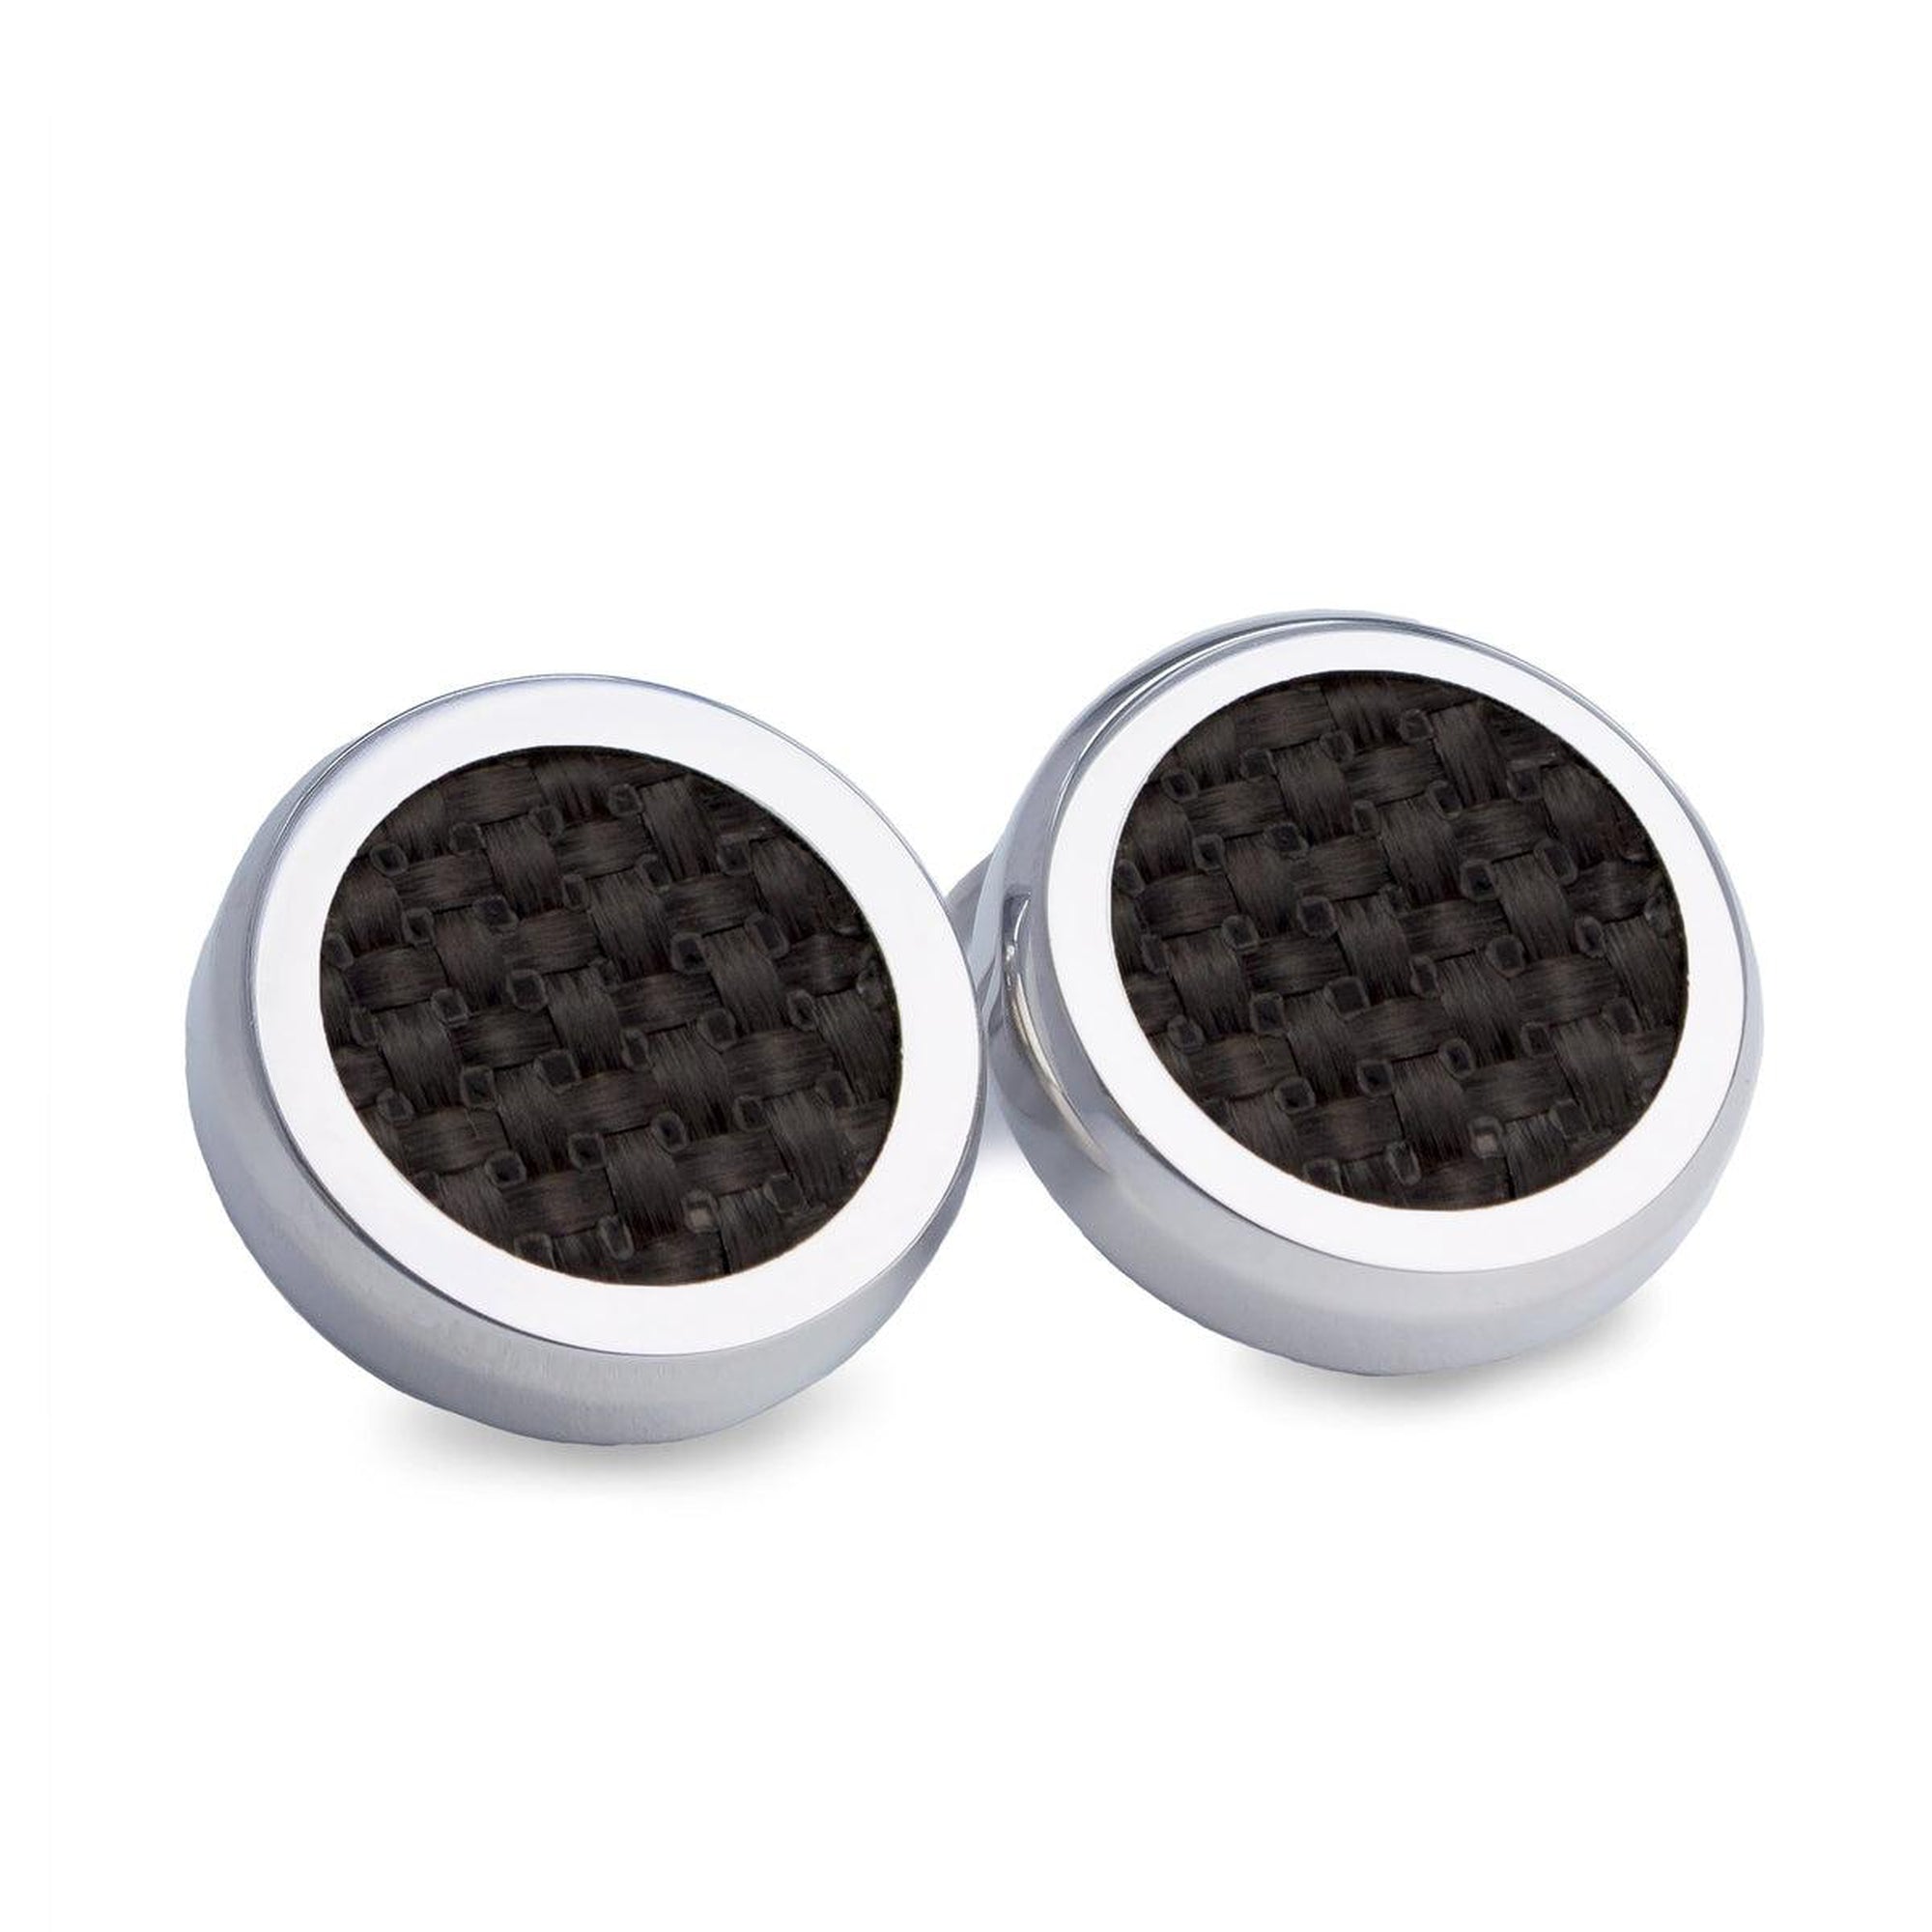 Round Silver Black Cufflinks with Clip-On Carbon Fibre Button Covers-Cufflinks.com.sg